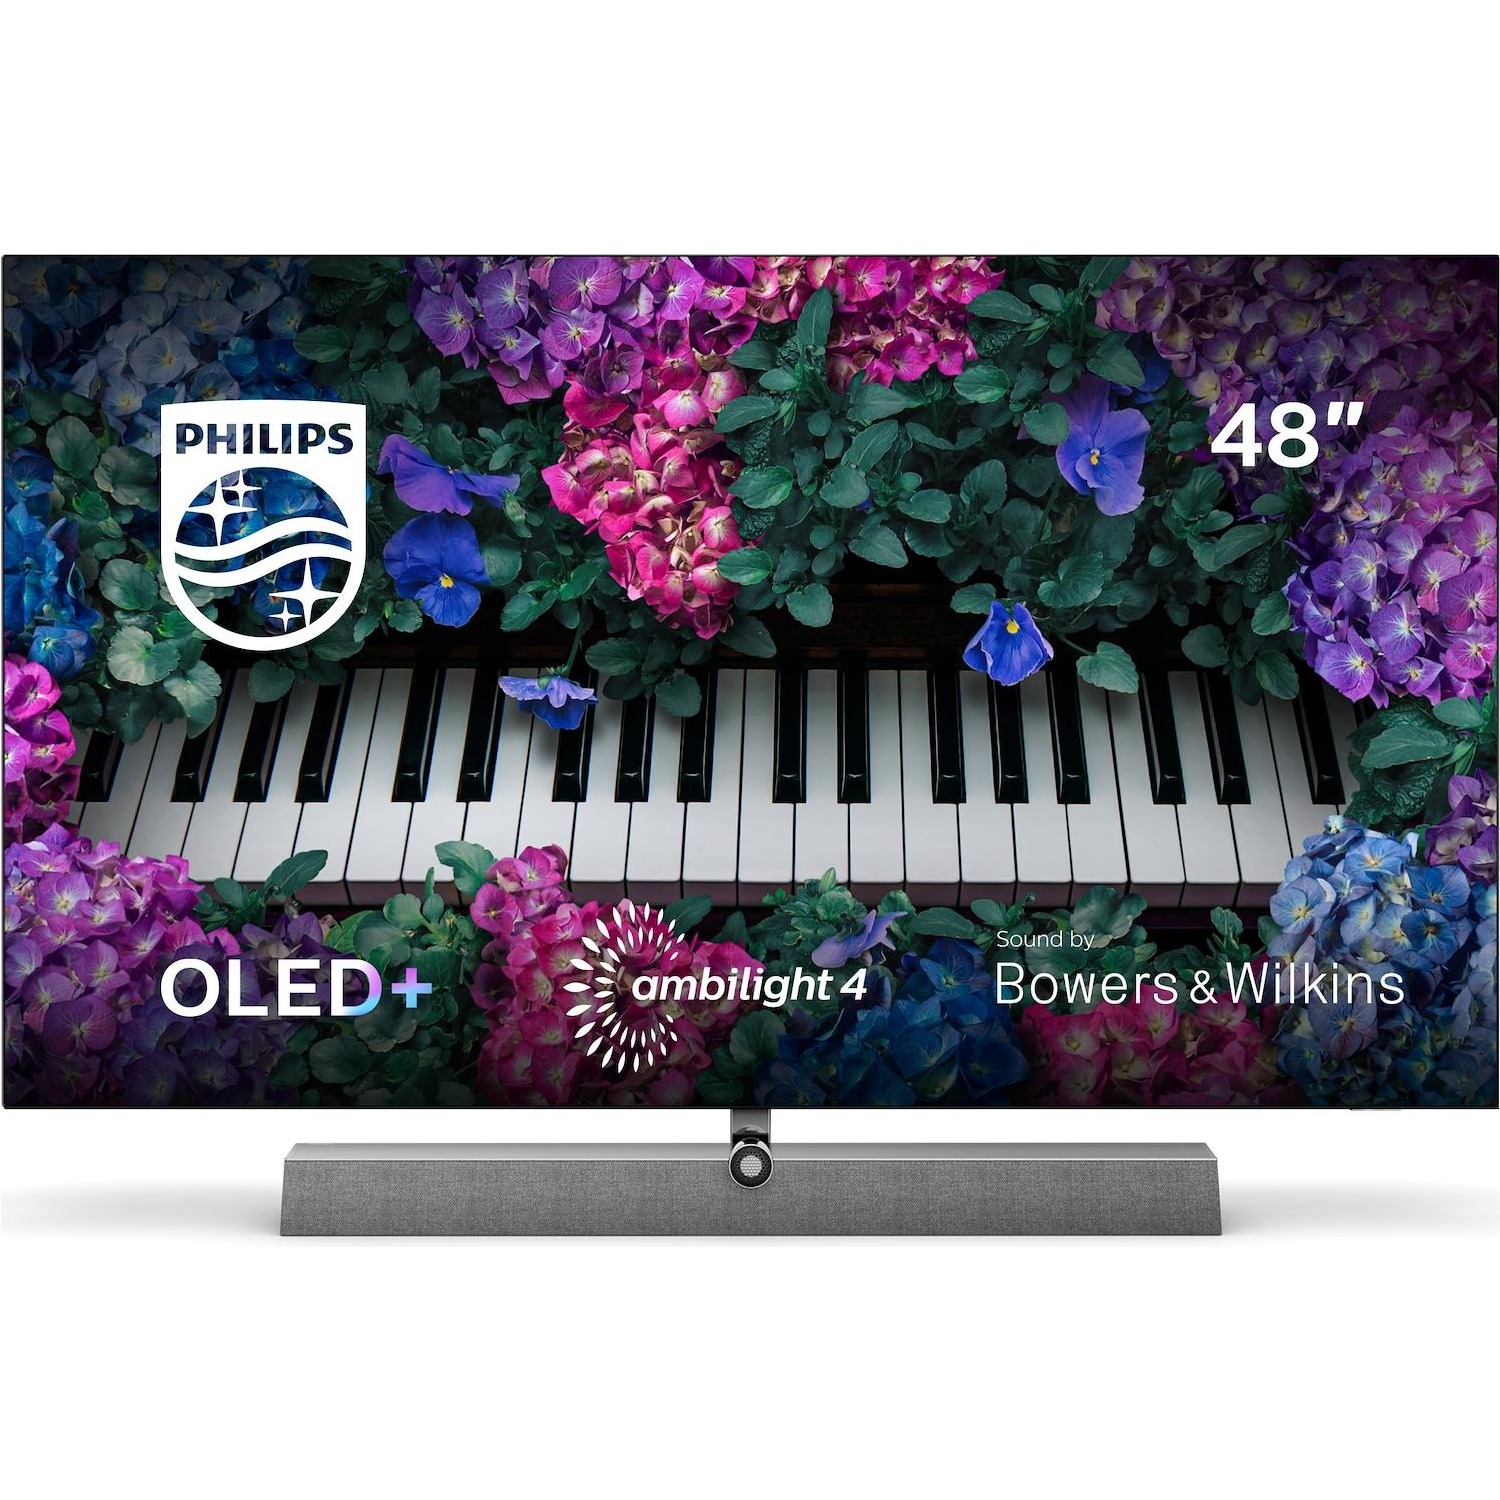 Immagine per TV OLED 4K UHD Android Smart Philips 48OLED935 da DIMOStore